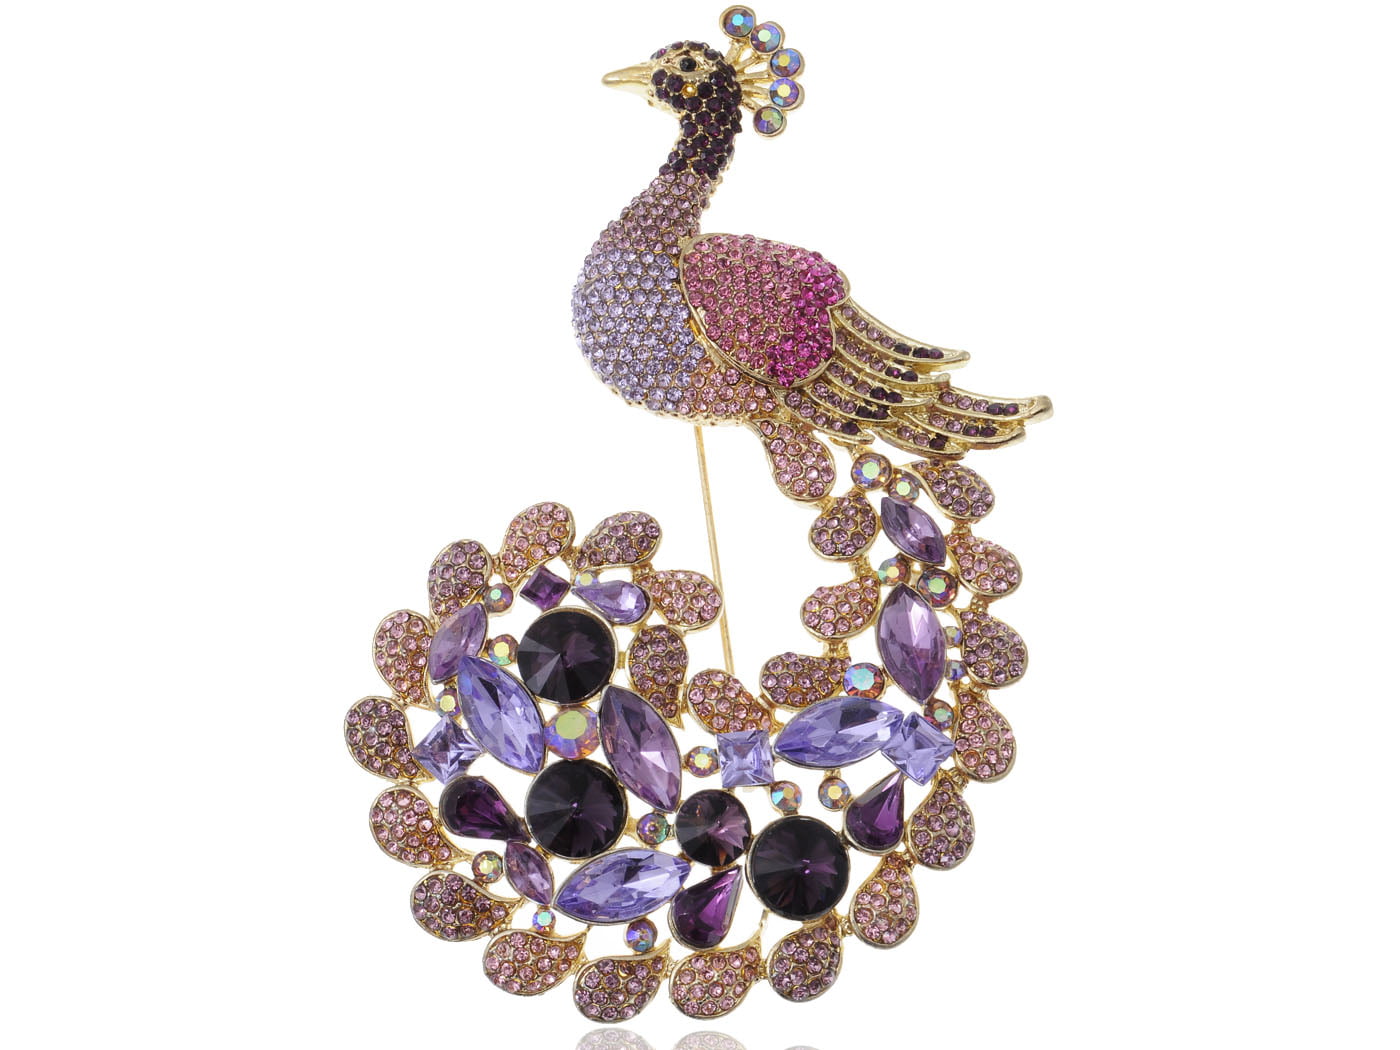 Colorful Rhinestone Peacock Tassel Brooch Pins for Women Fashion